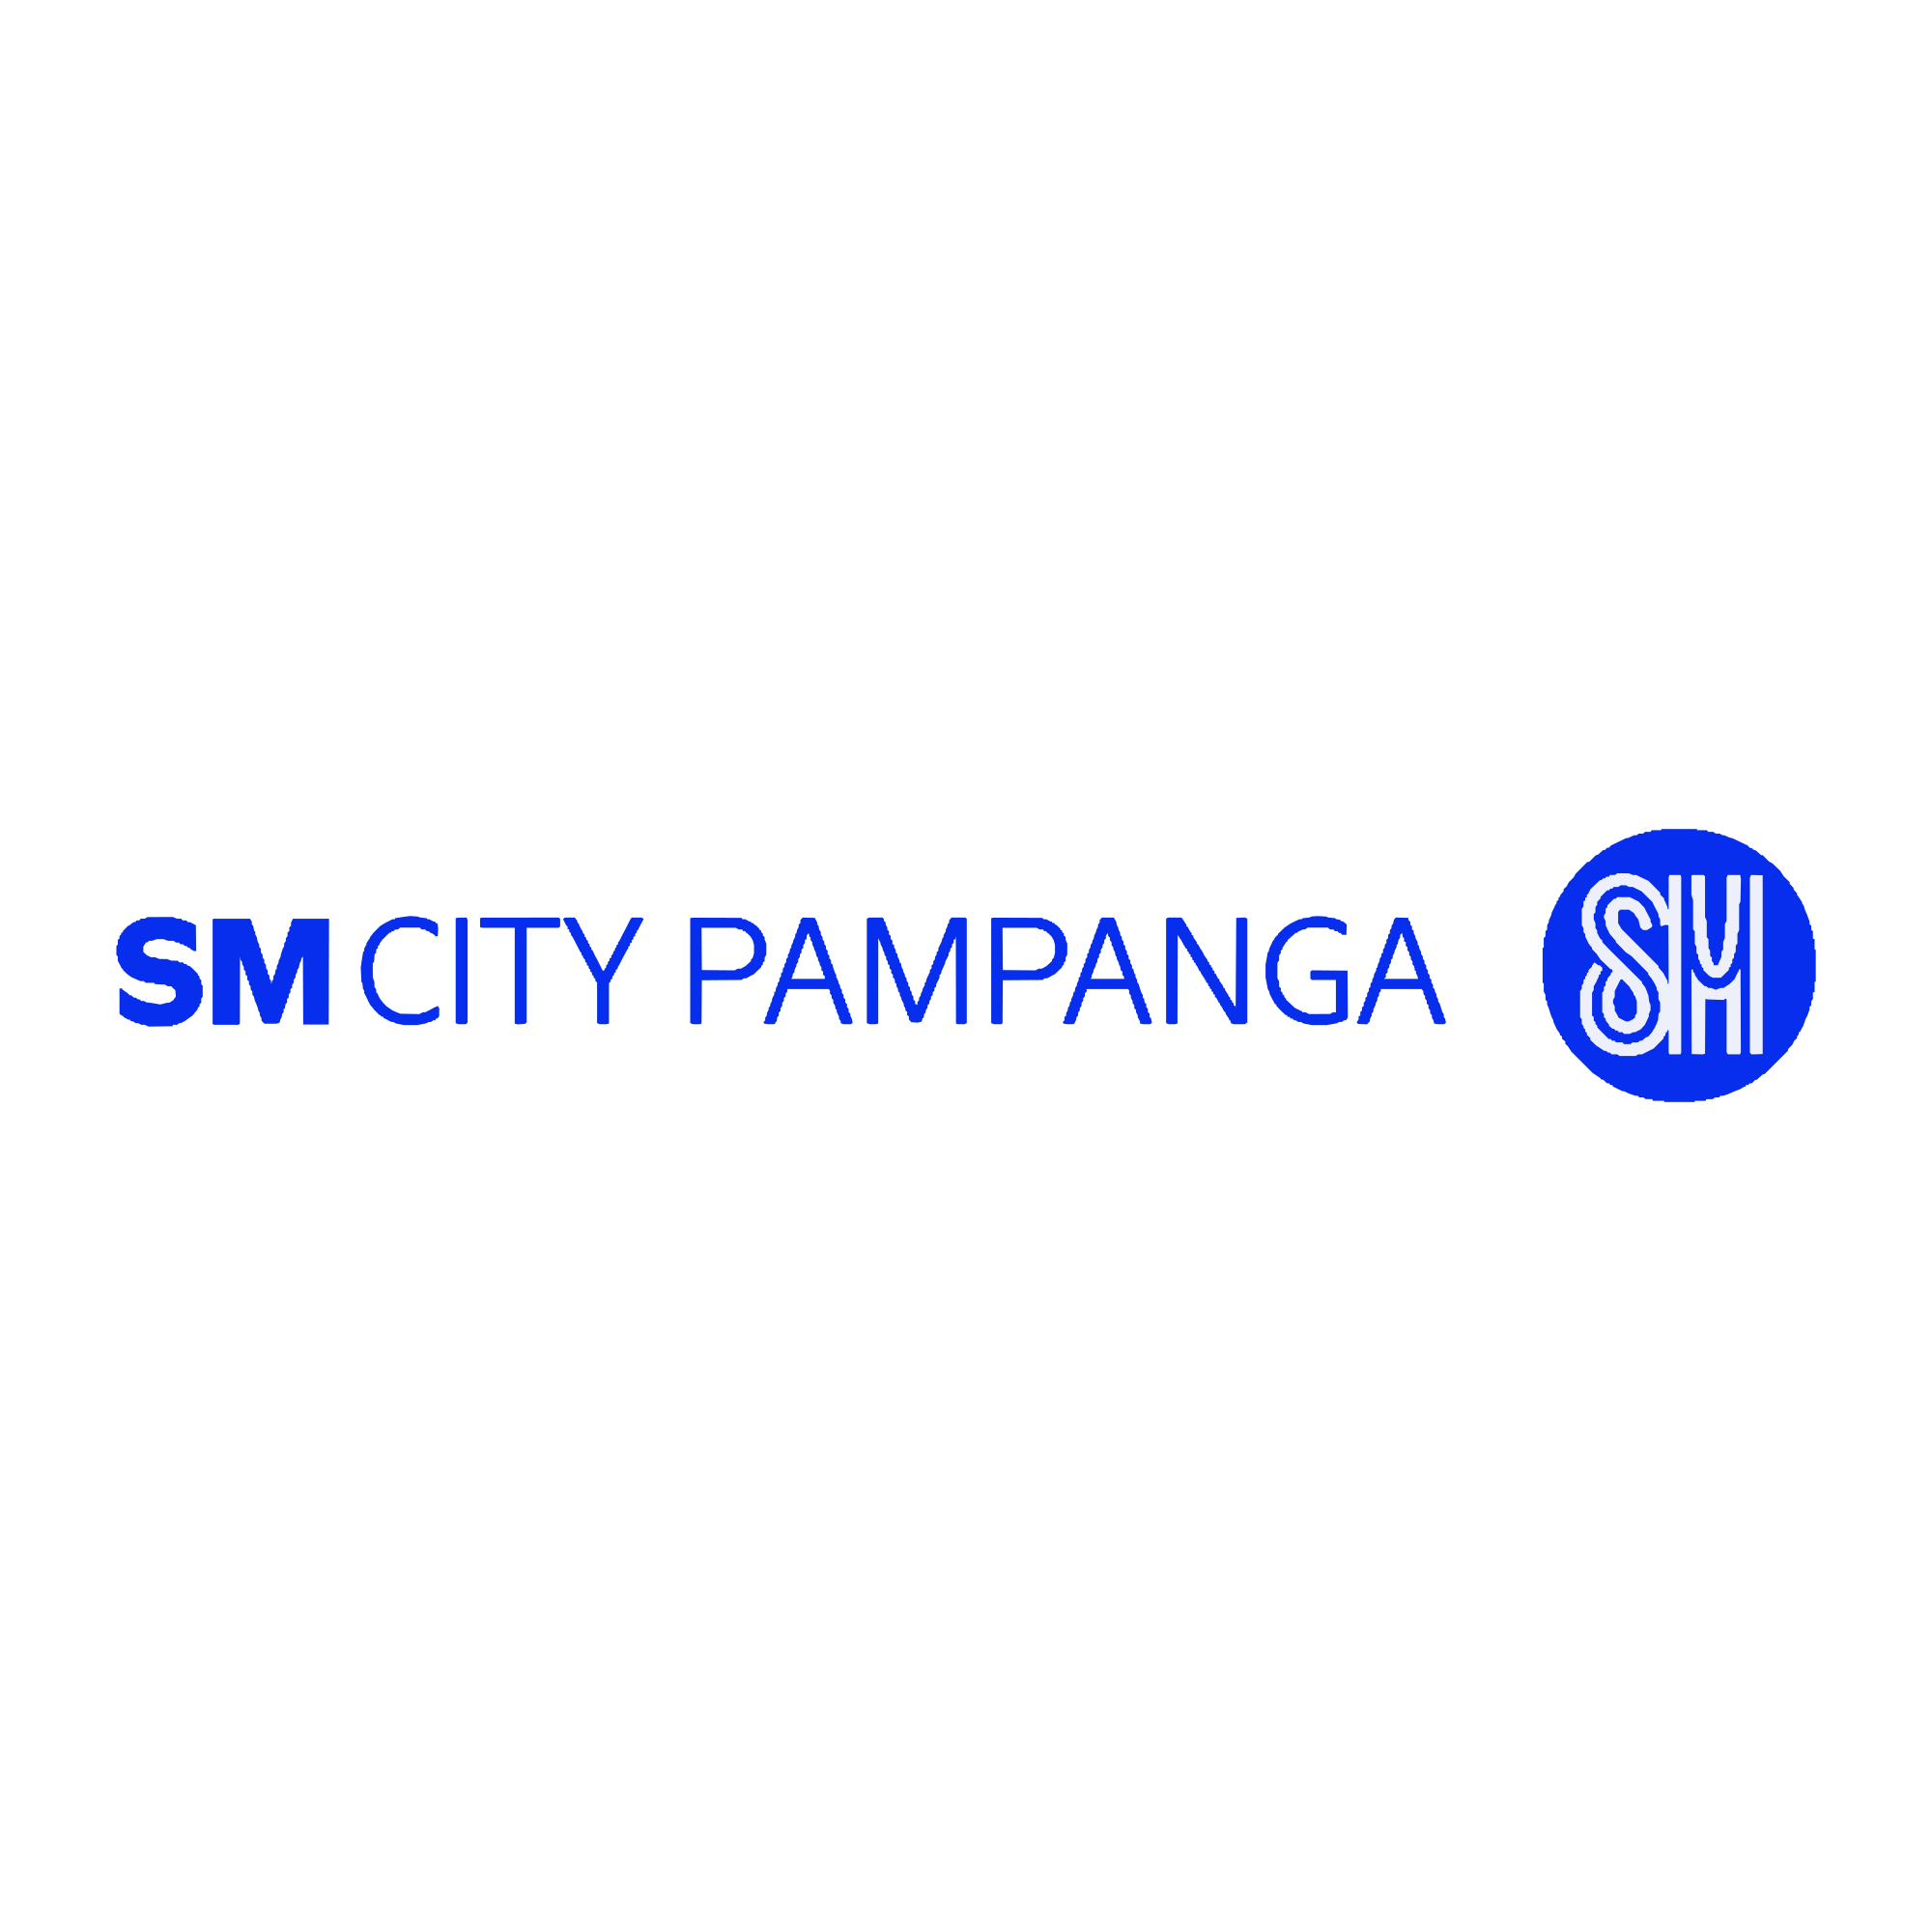 SM City Pampanga 2022 Logo Transparent Image